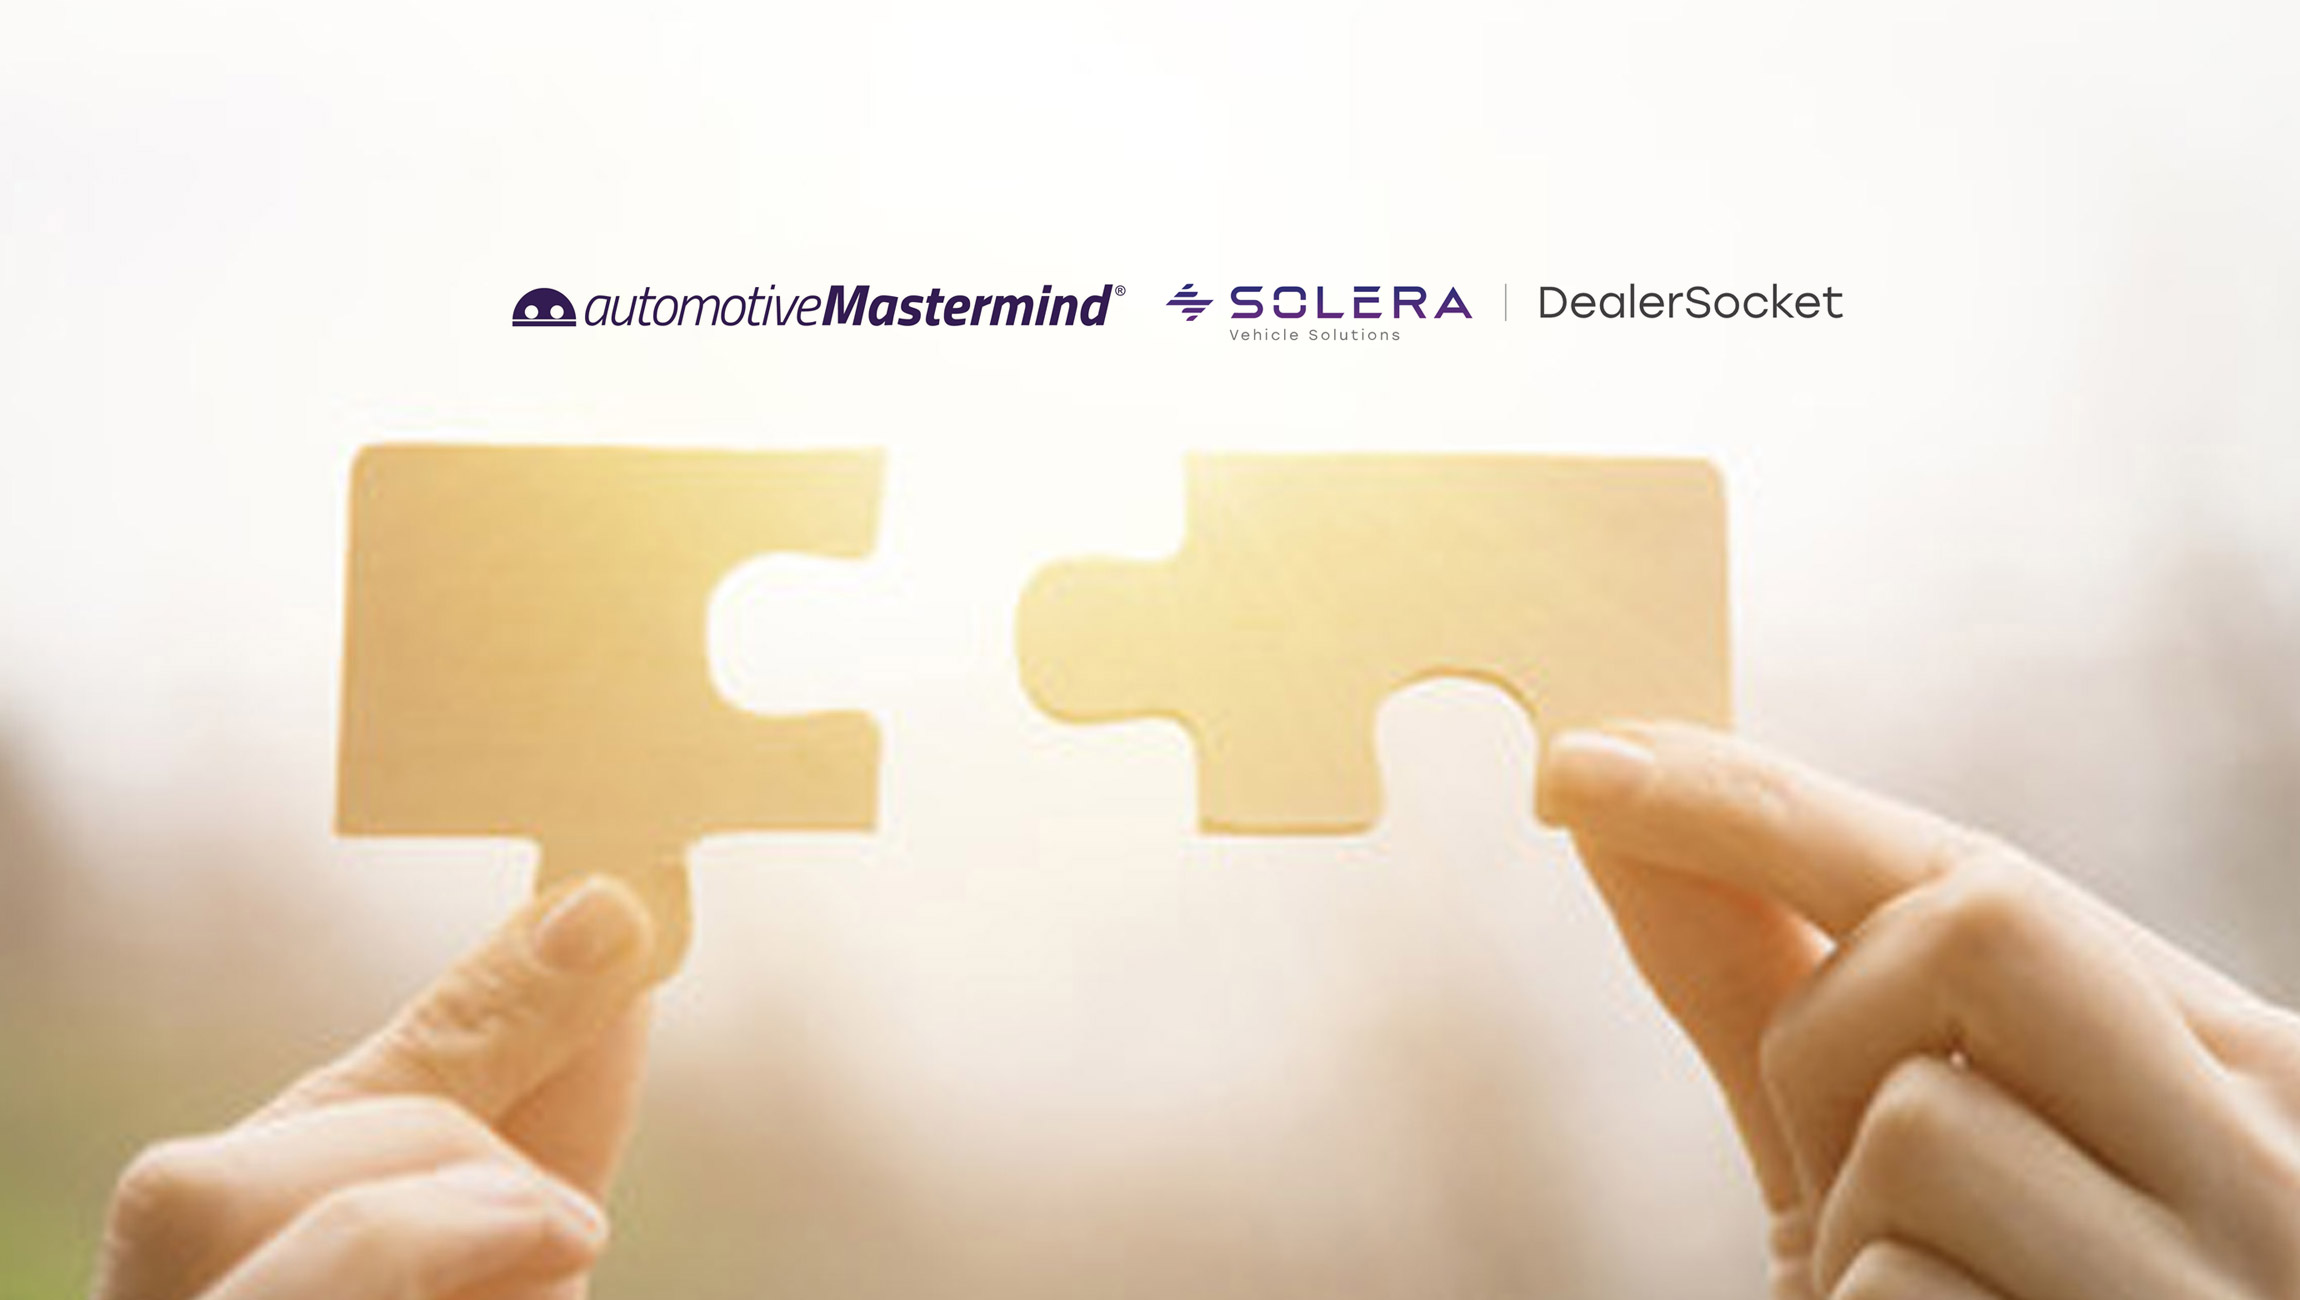 automotiveMastermind Integrates with DealerSocket to Improve Efficiency for Dealership Sales Teams